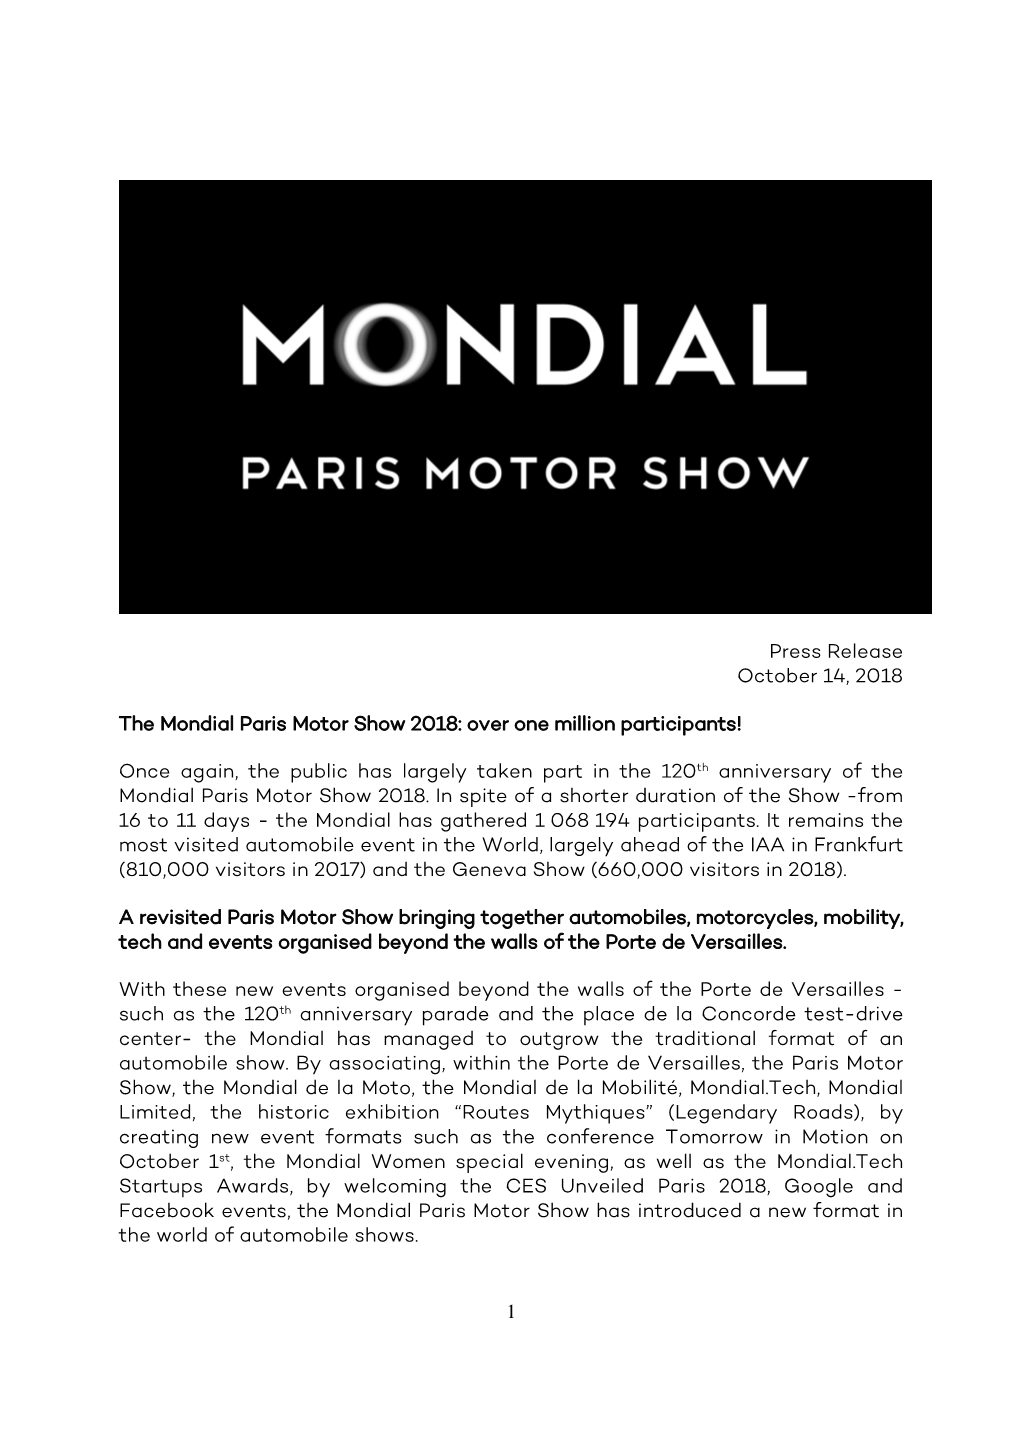 Press Release Mondial Paris Motor Show 2018 Vuk